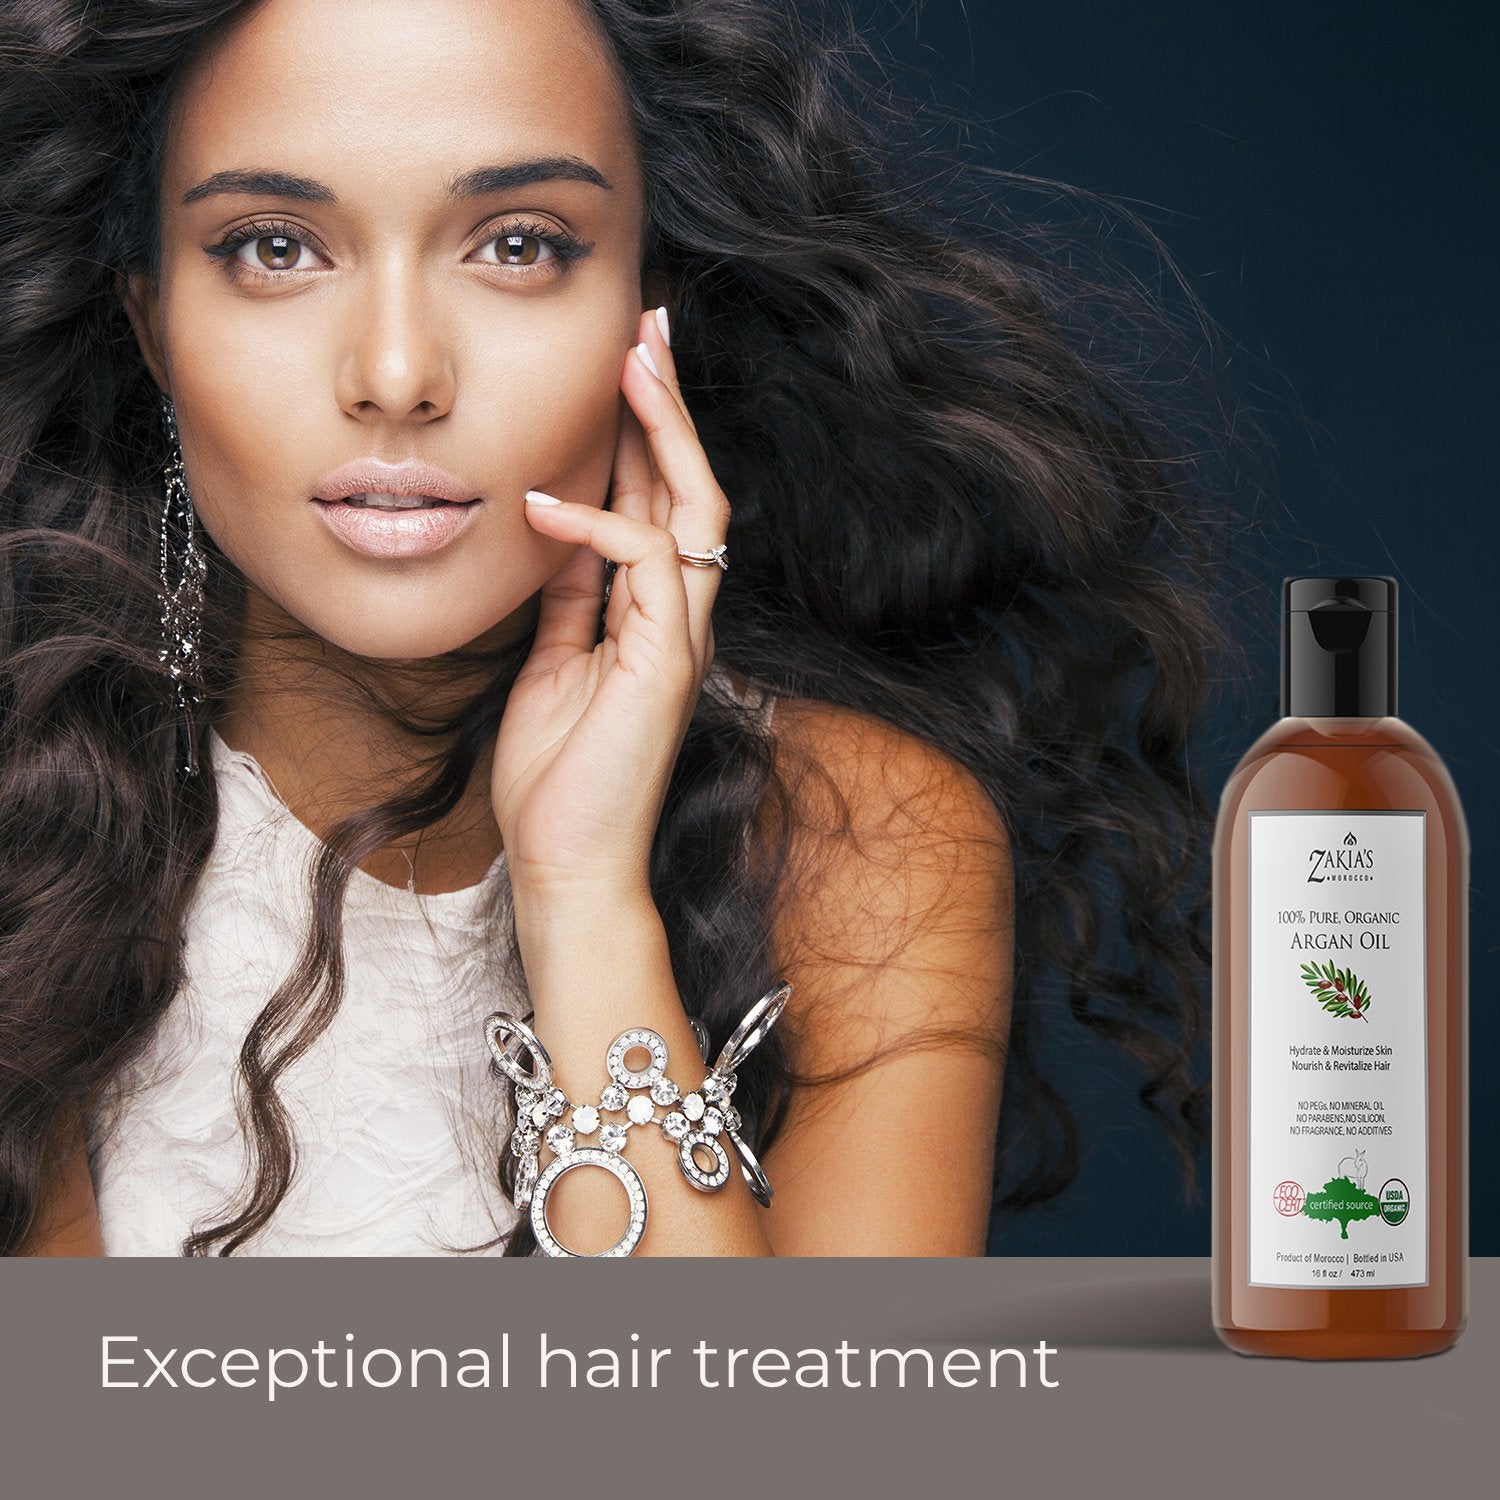 Silicon Mix Moroccon Argan Oil Hair Treatment 8oz - IENJOY BEAUTY HAIR SKIN  CARE ONLINE SHOP